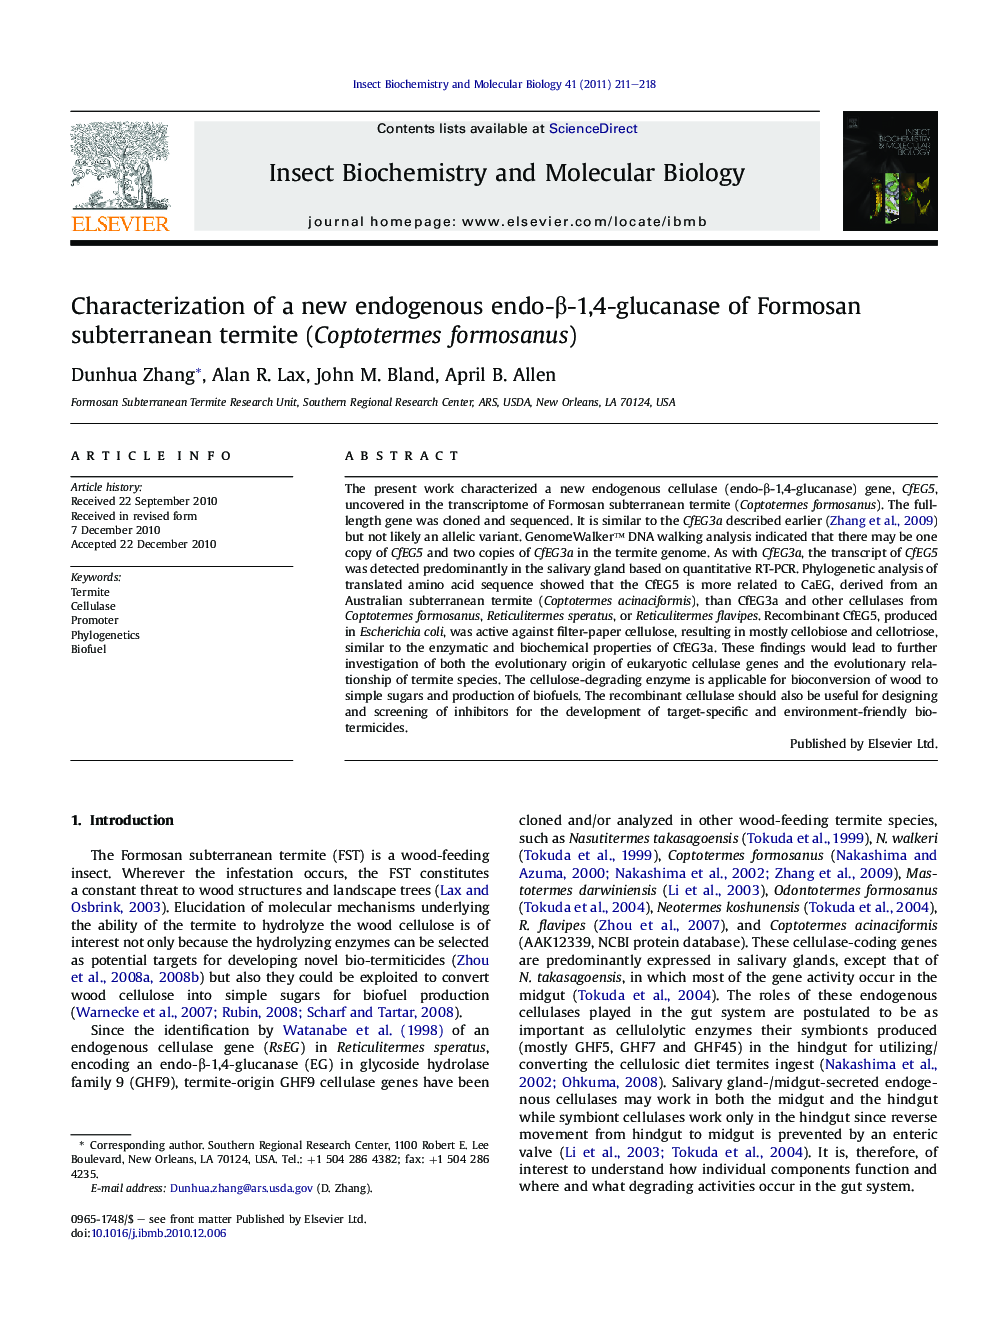 Characterization of a new endogenous endo-β-1,4-glucanase of Formosan subterranean termite (Coptotermes formosanus)